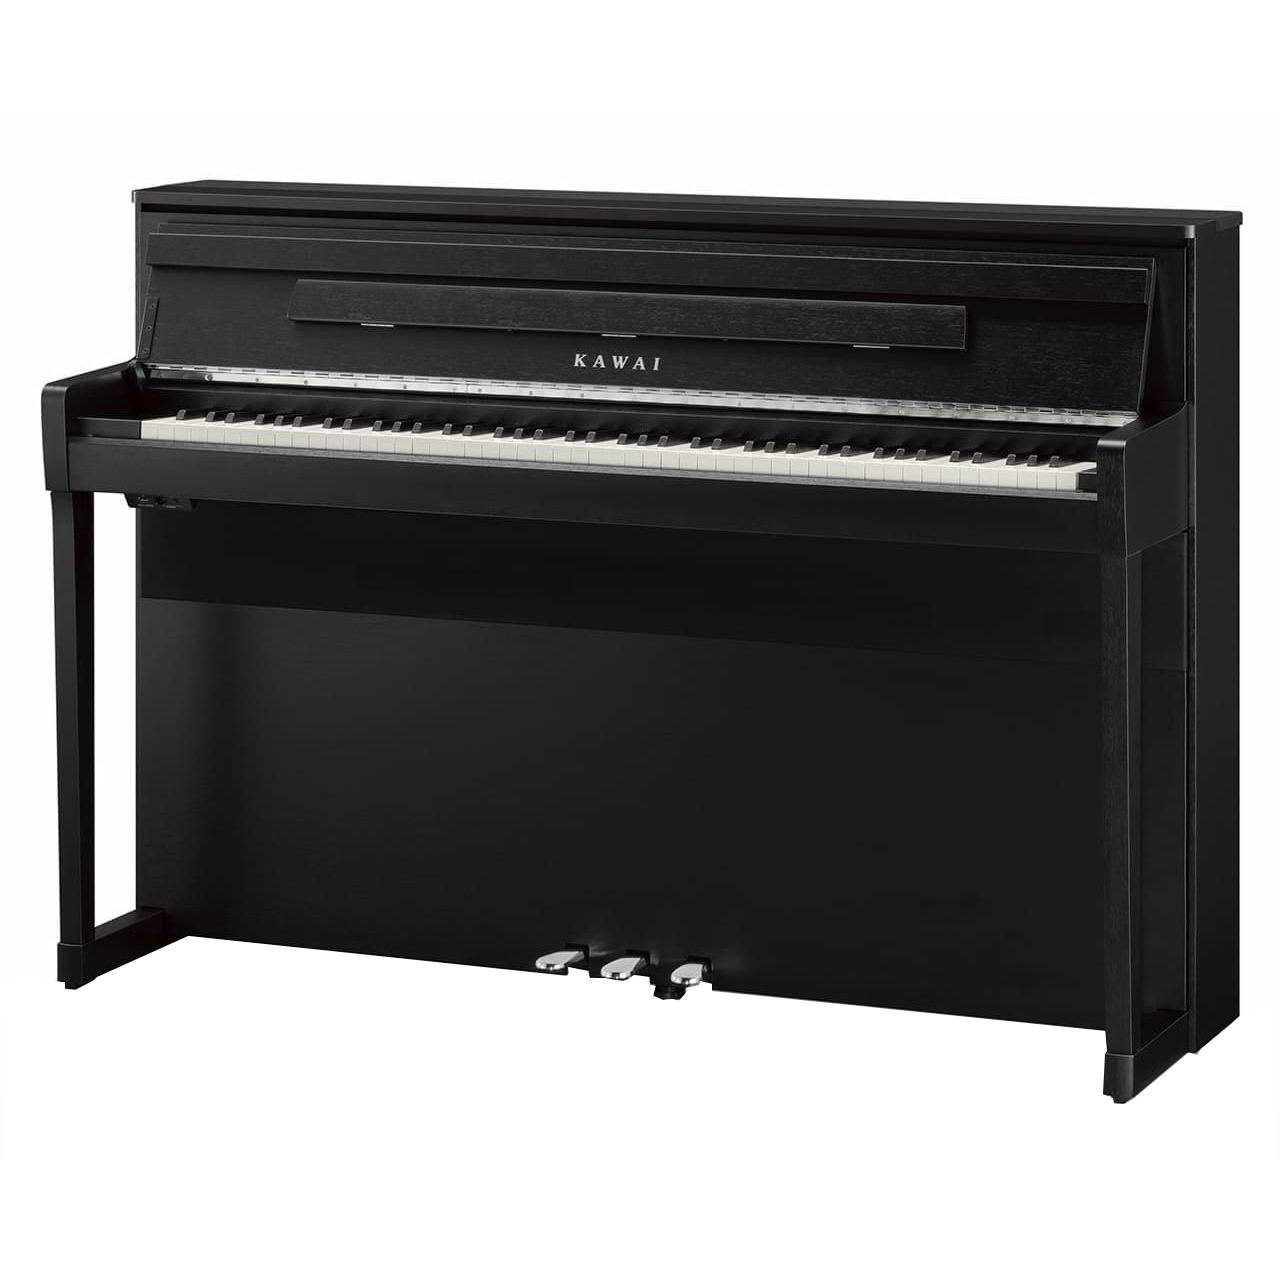 KAWAI CA99B - цифр. пианино, механика GF III, 90 тембров, 256 полифония, 45 вт х 3, цвет черный